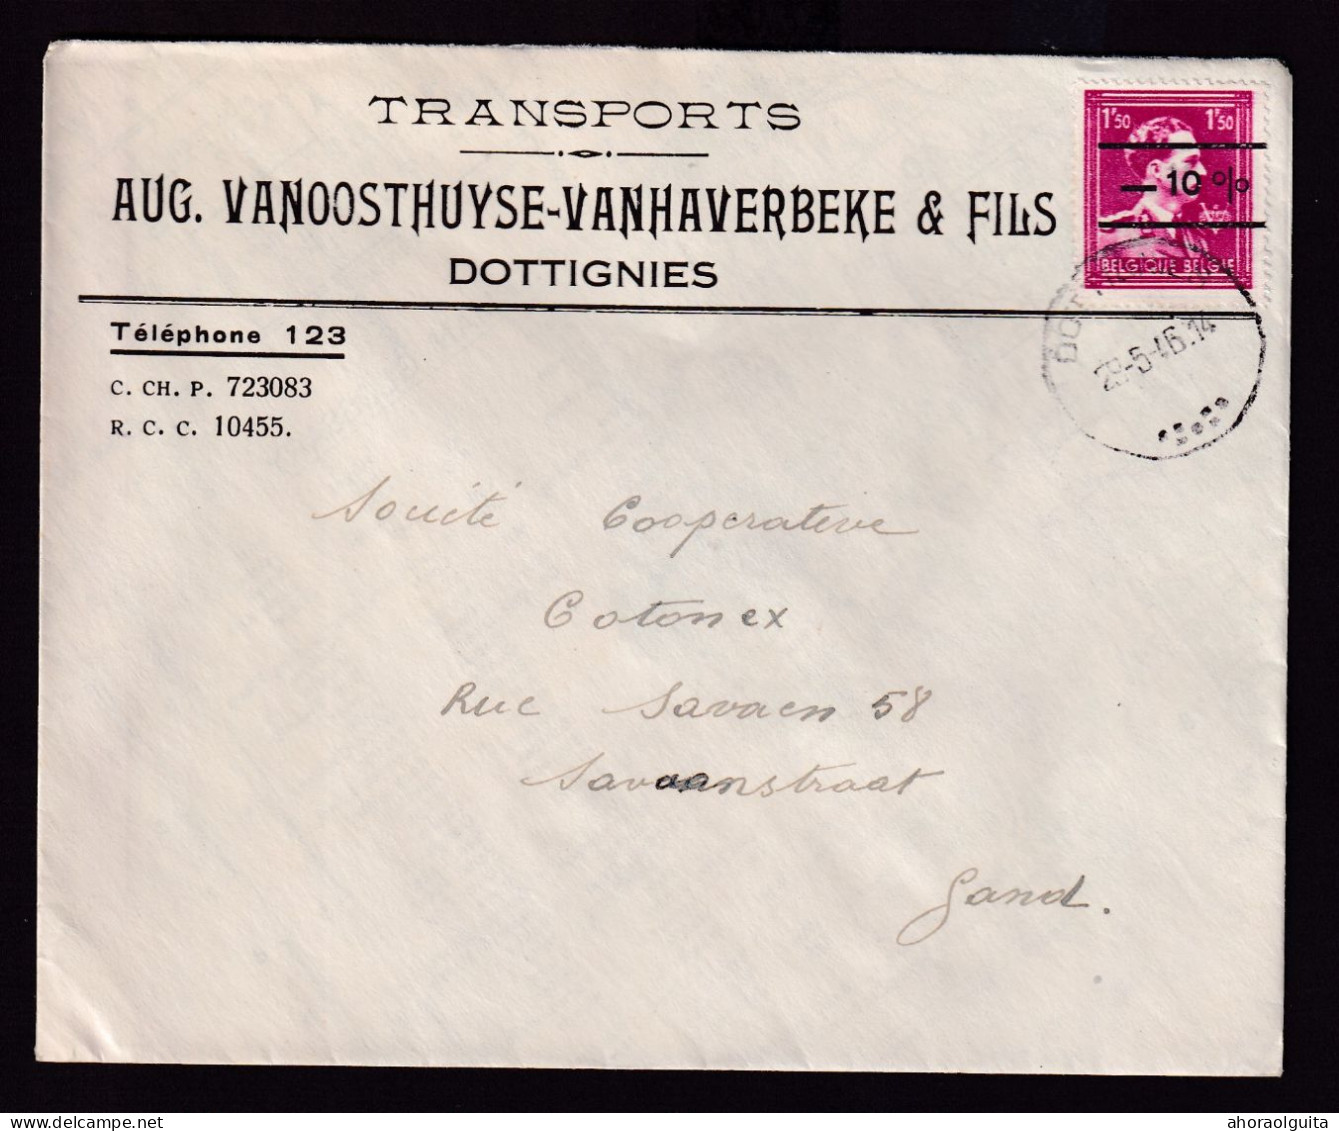 DDFF 283 -- Enveloppe TP Surcharge Locale Moins 10 % DOTTIGNIES 1946 - Entete Transports Vanoostenhuyse-Vanhaverbeke - 1946 -10%